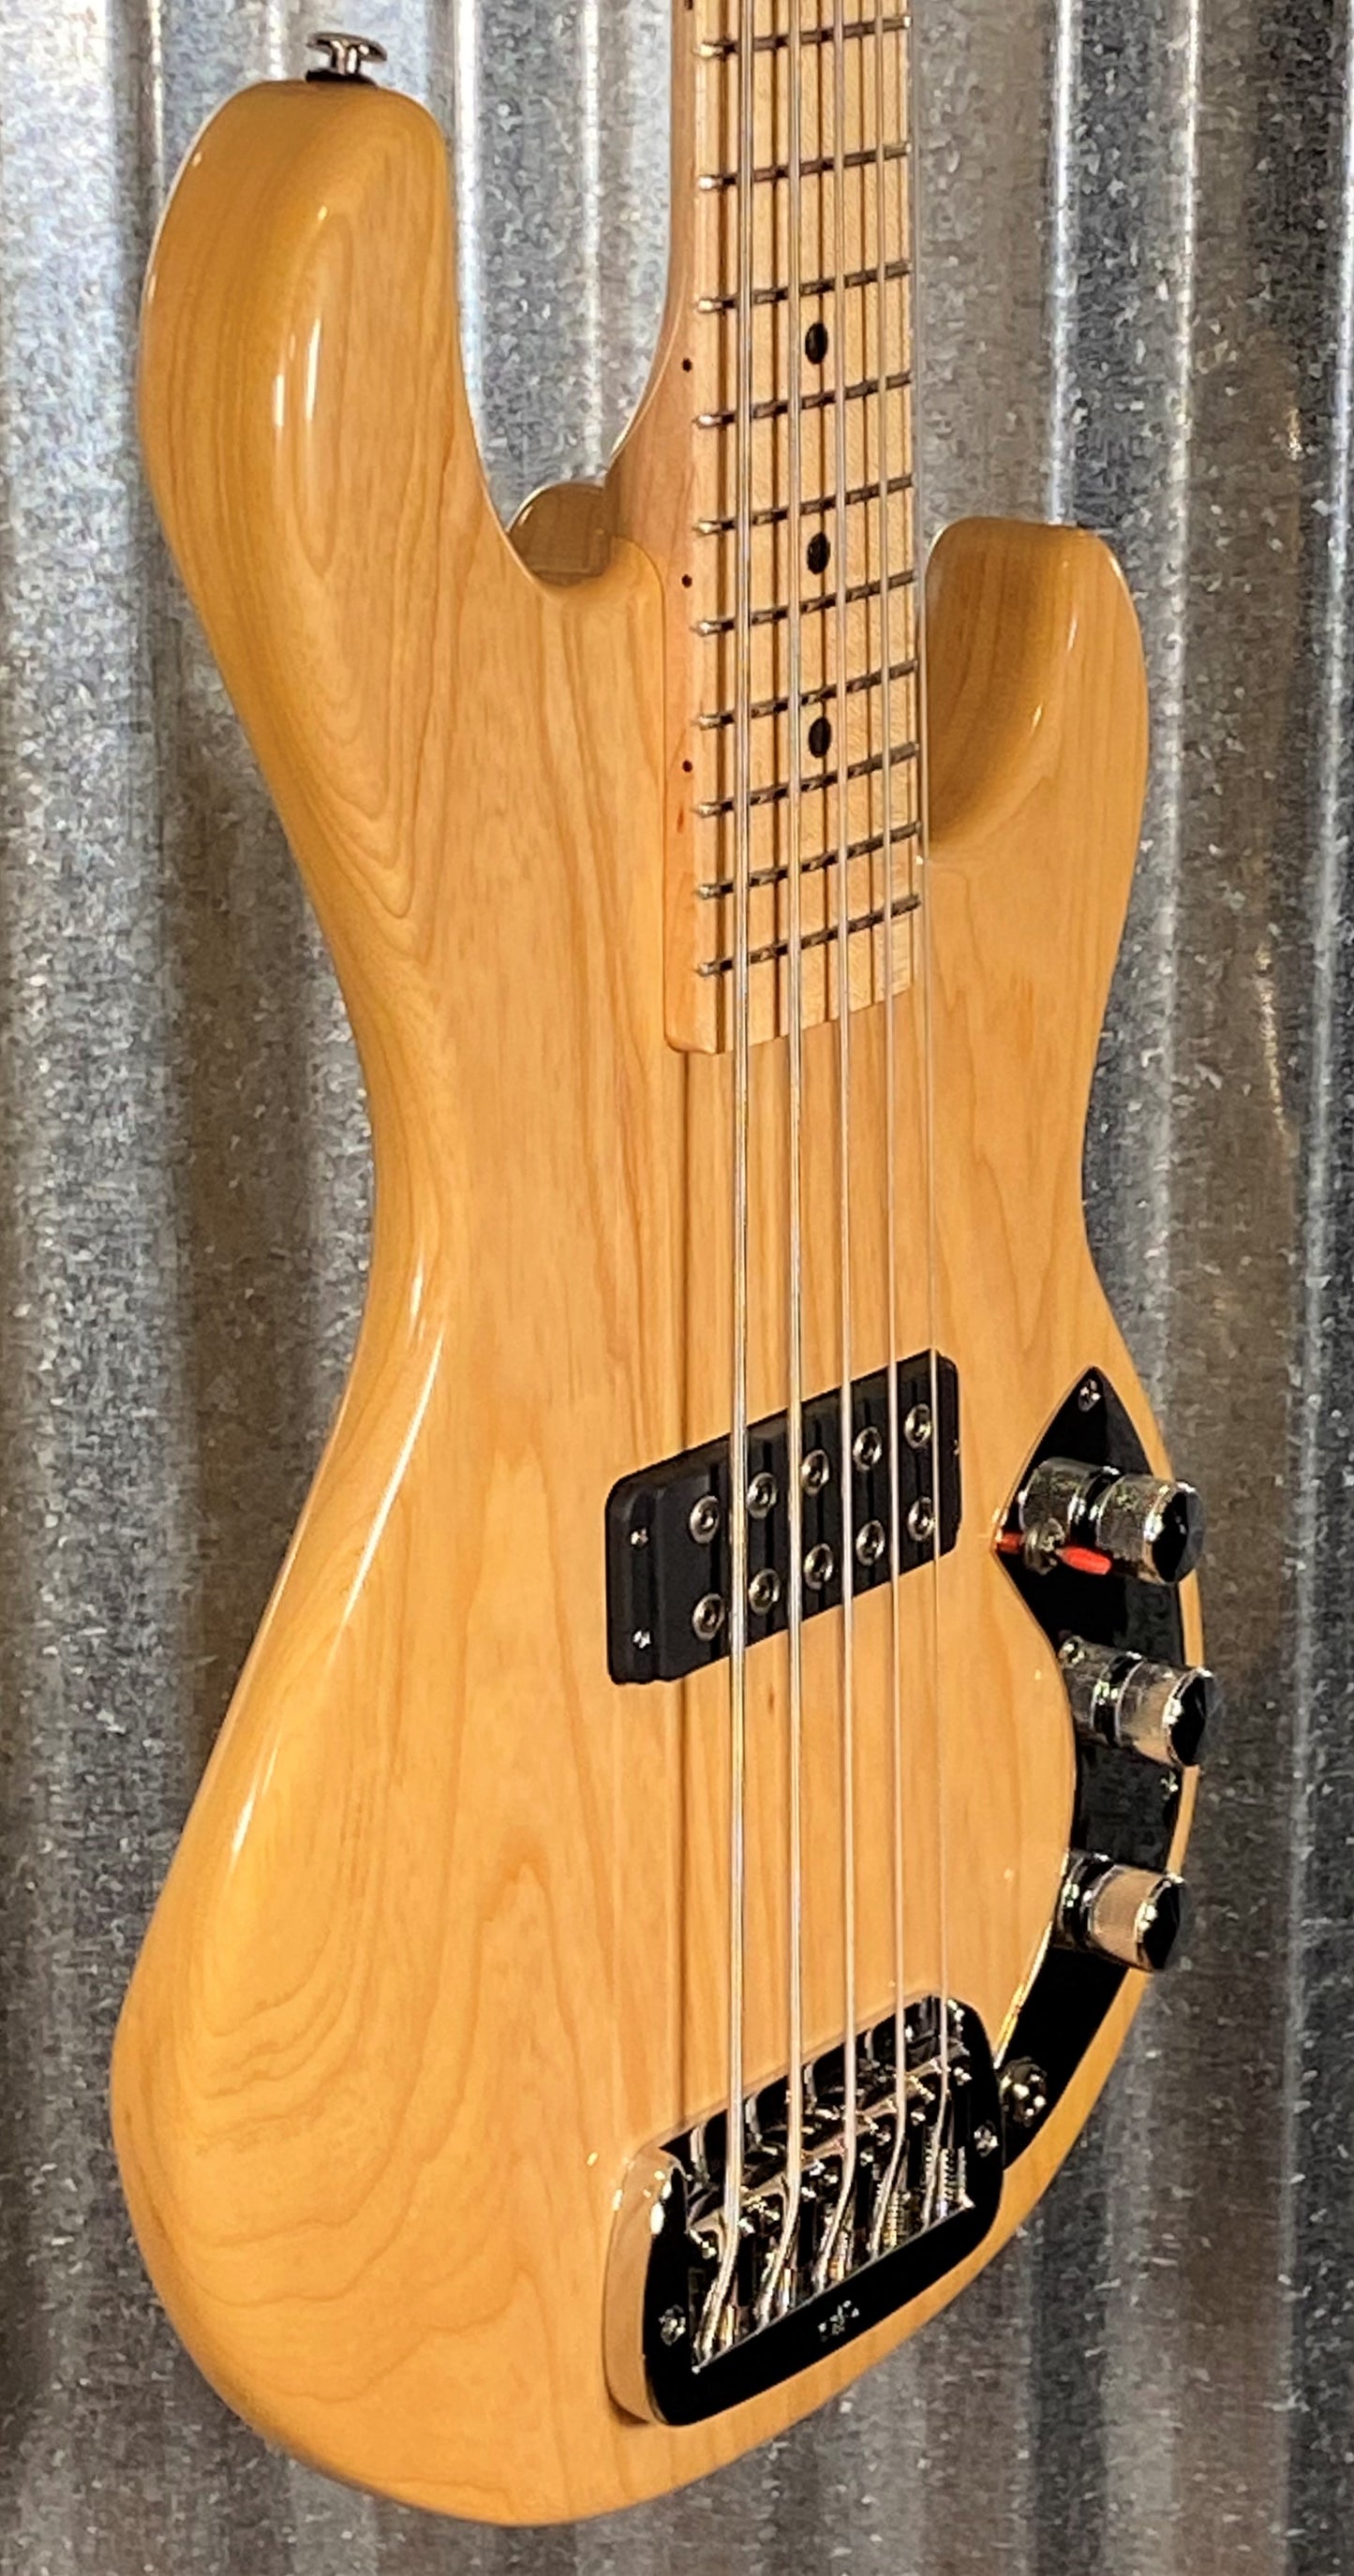 G&L USA CLF Research L-1000 S750 5 String Bass Natural & Case #5023